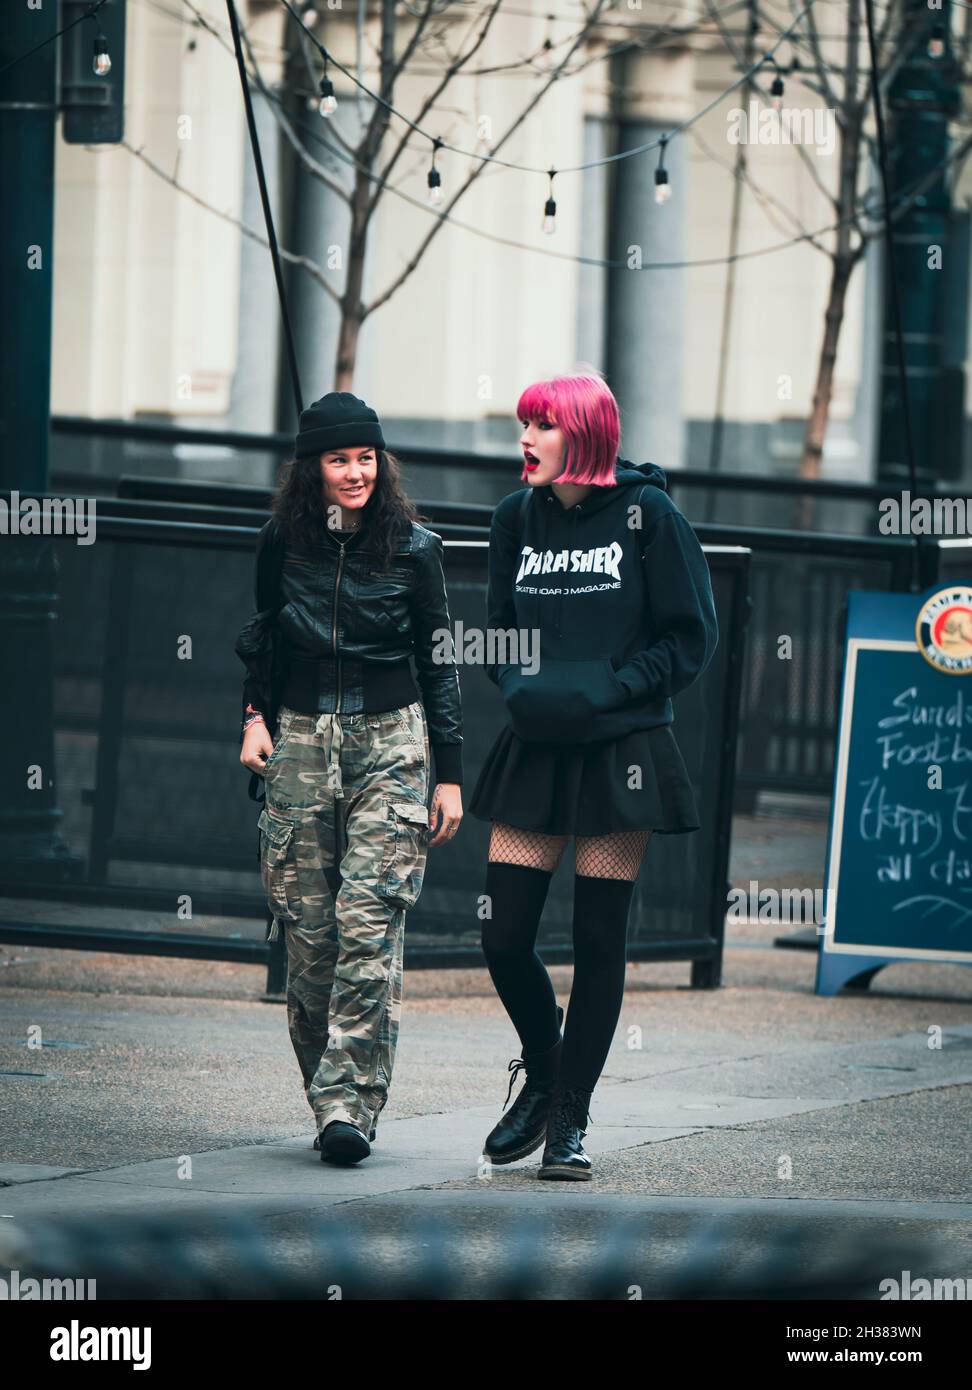 CALGARY, CANADA - Oct 24, 2021: Two women socializing as they walk downtown. Stock Photo